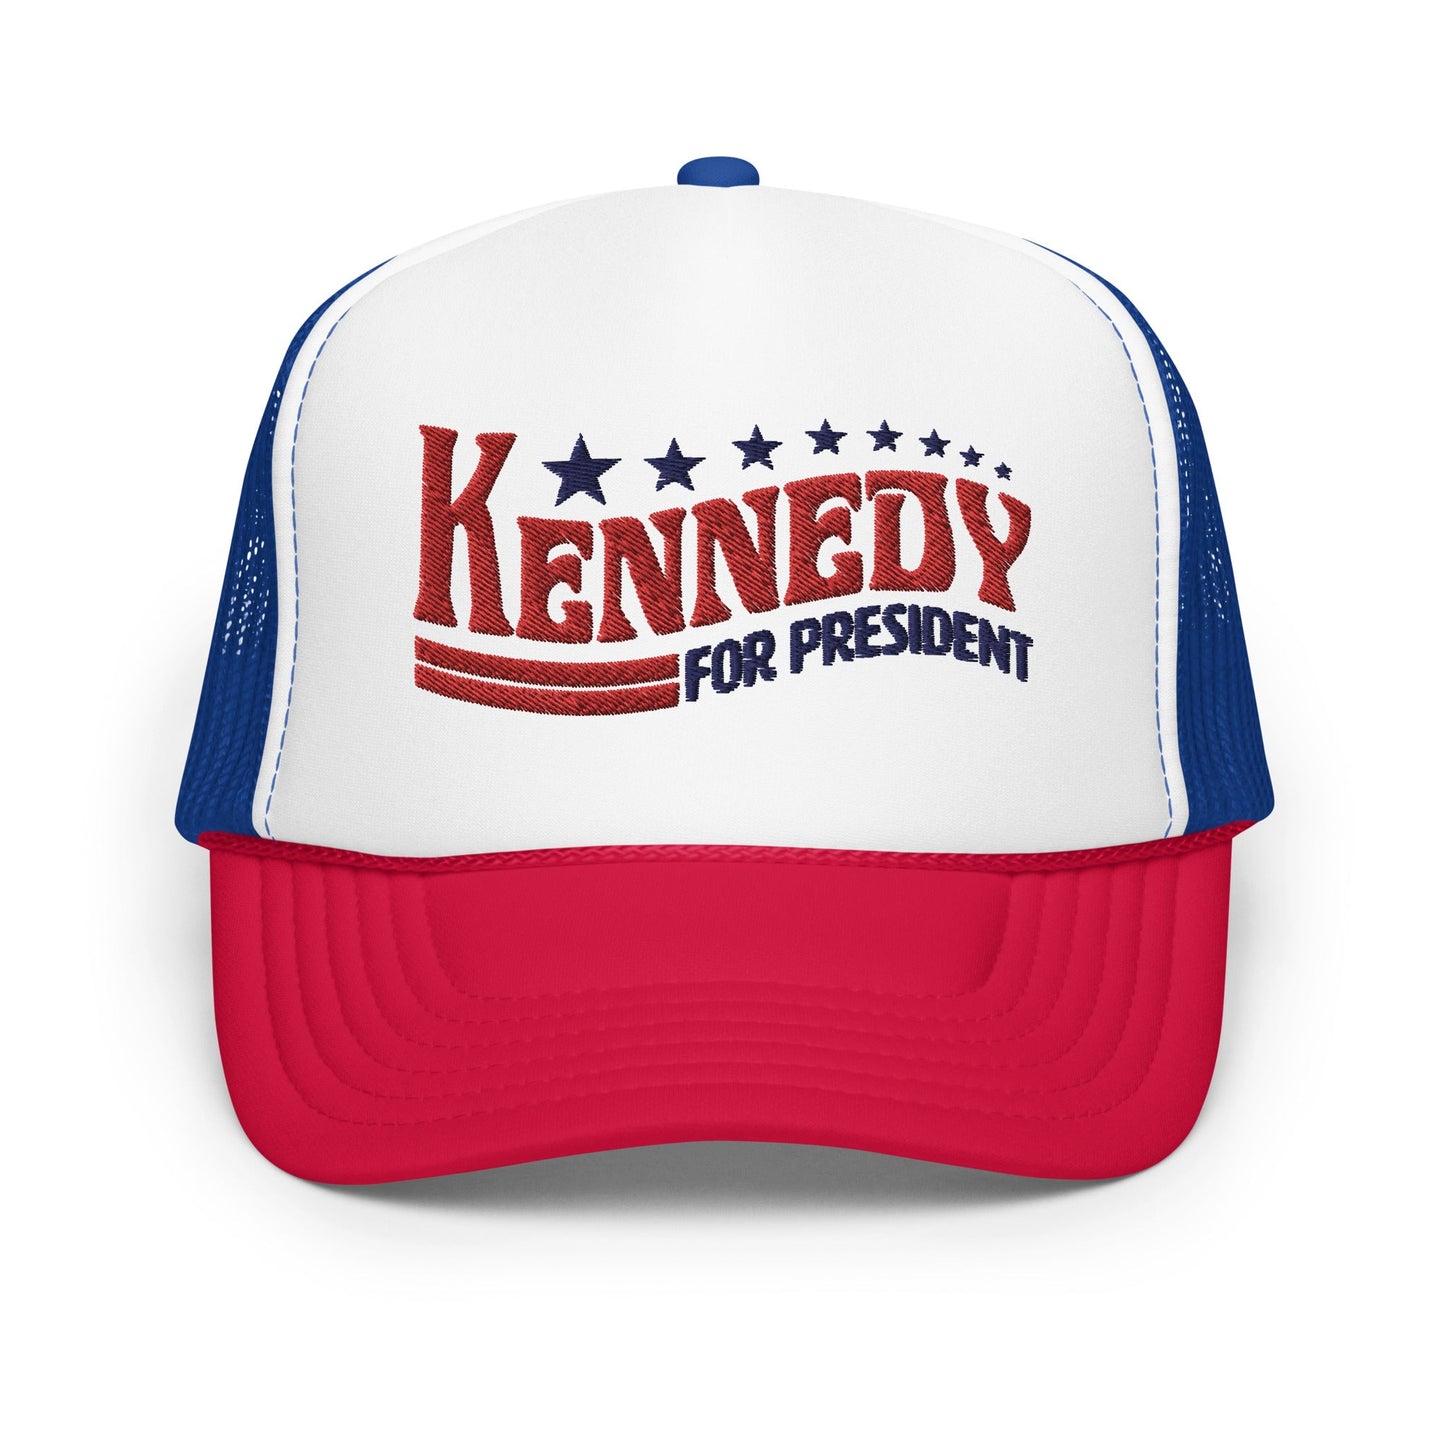 Kennedy for President Vintage Foam Trucker Hat - Team Kennedy Official Merchandise